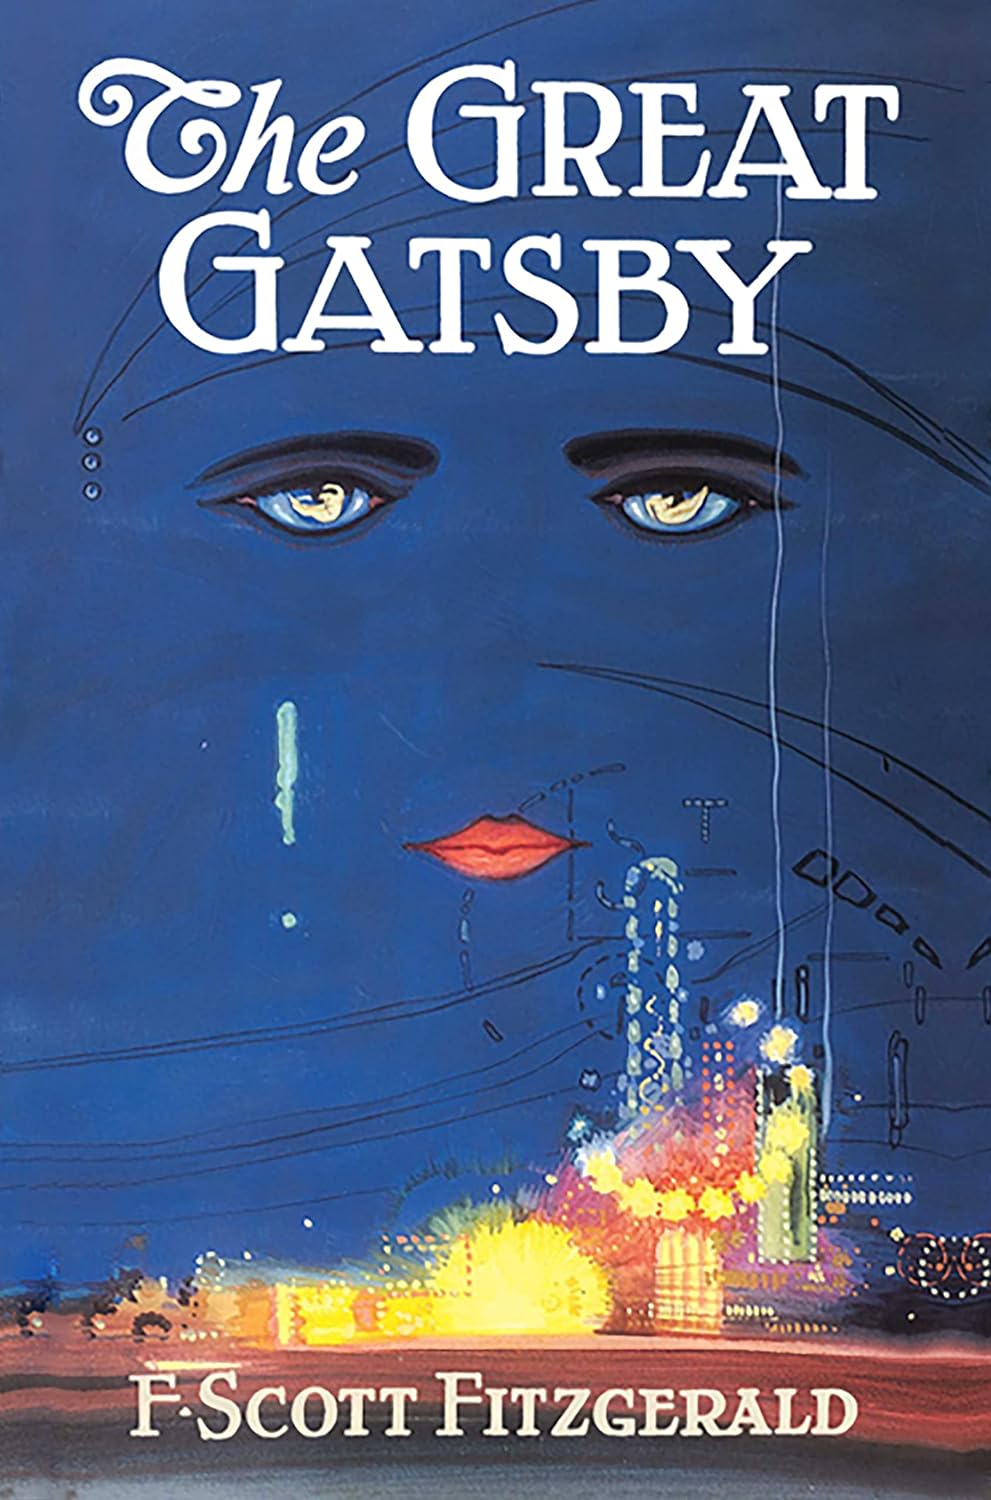 The original 1925 cover of F. Scott Fitzgerald’s classic novel, The Great Gatsby 